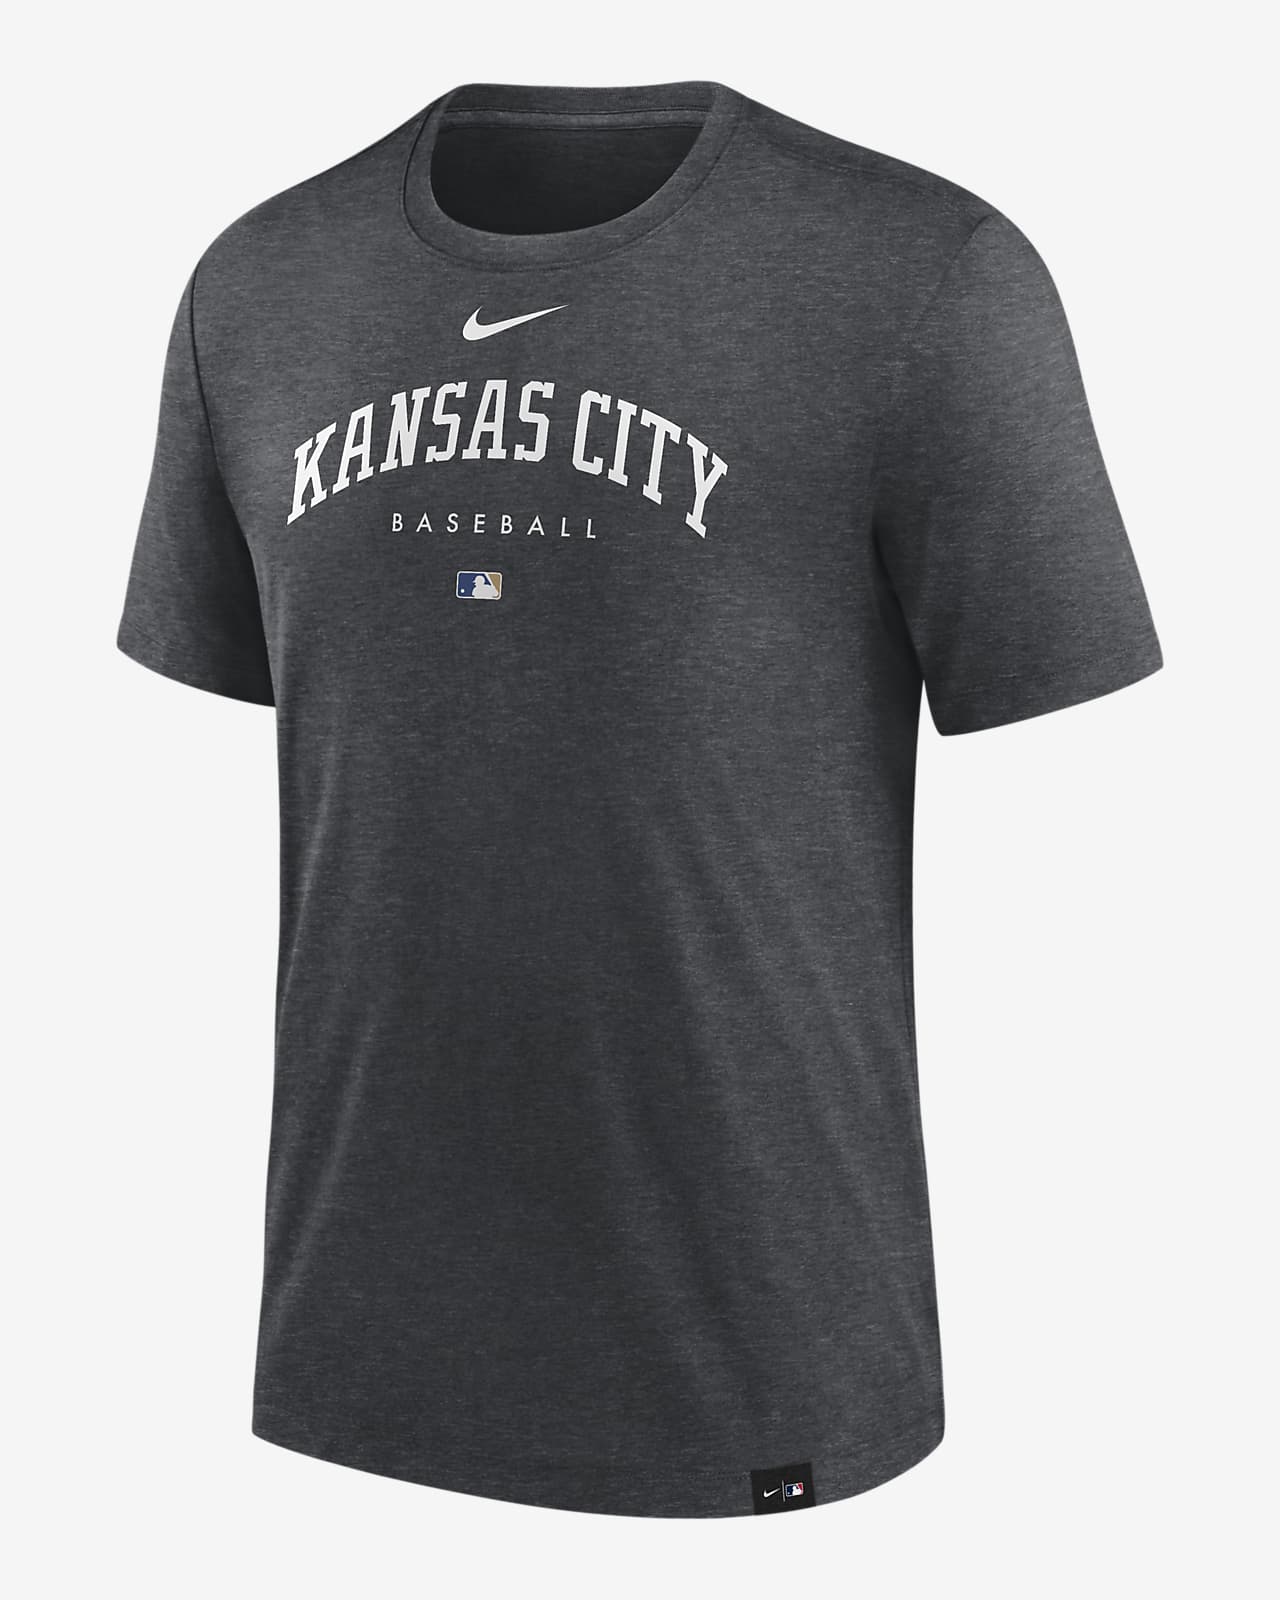  Kansas City Kings Logo Cozy Cotton Sweatshirts for Male :  Clothing, Shoes & Jewelry